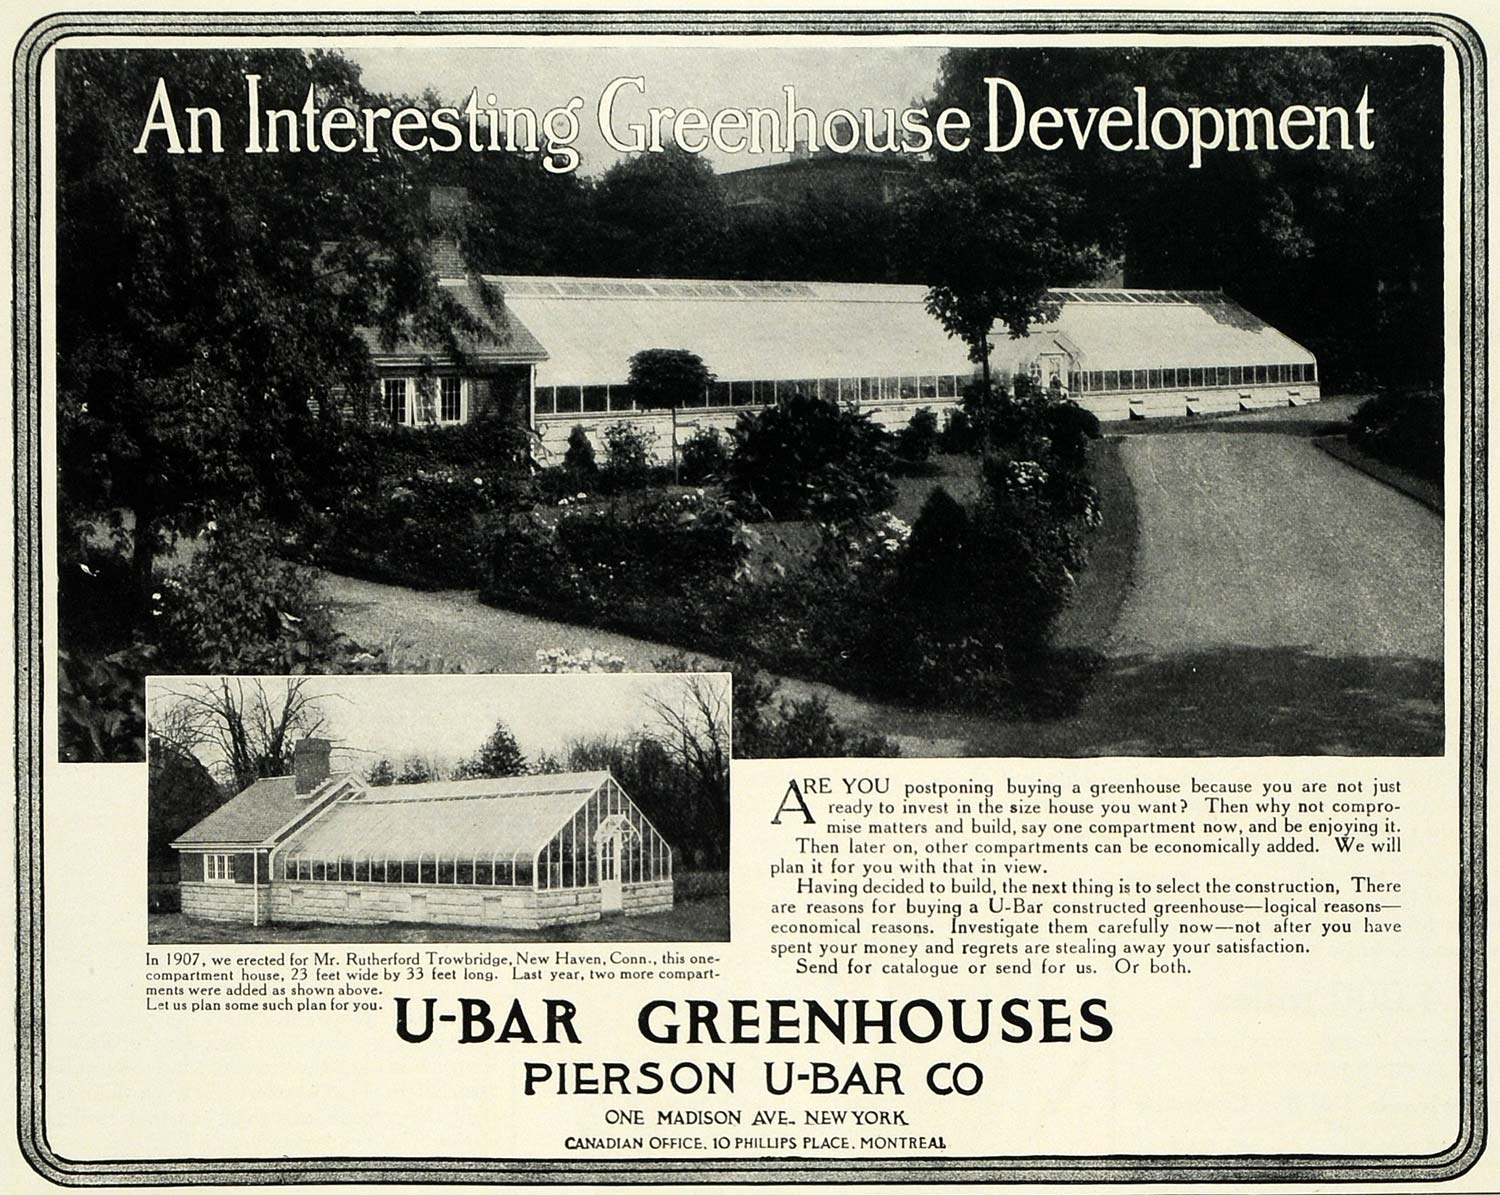 191 Ad Rutherford Trowbridge Pierson U-Bar Greenhouses - ORIGINAL SUB1